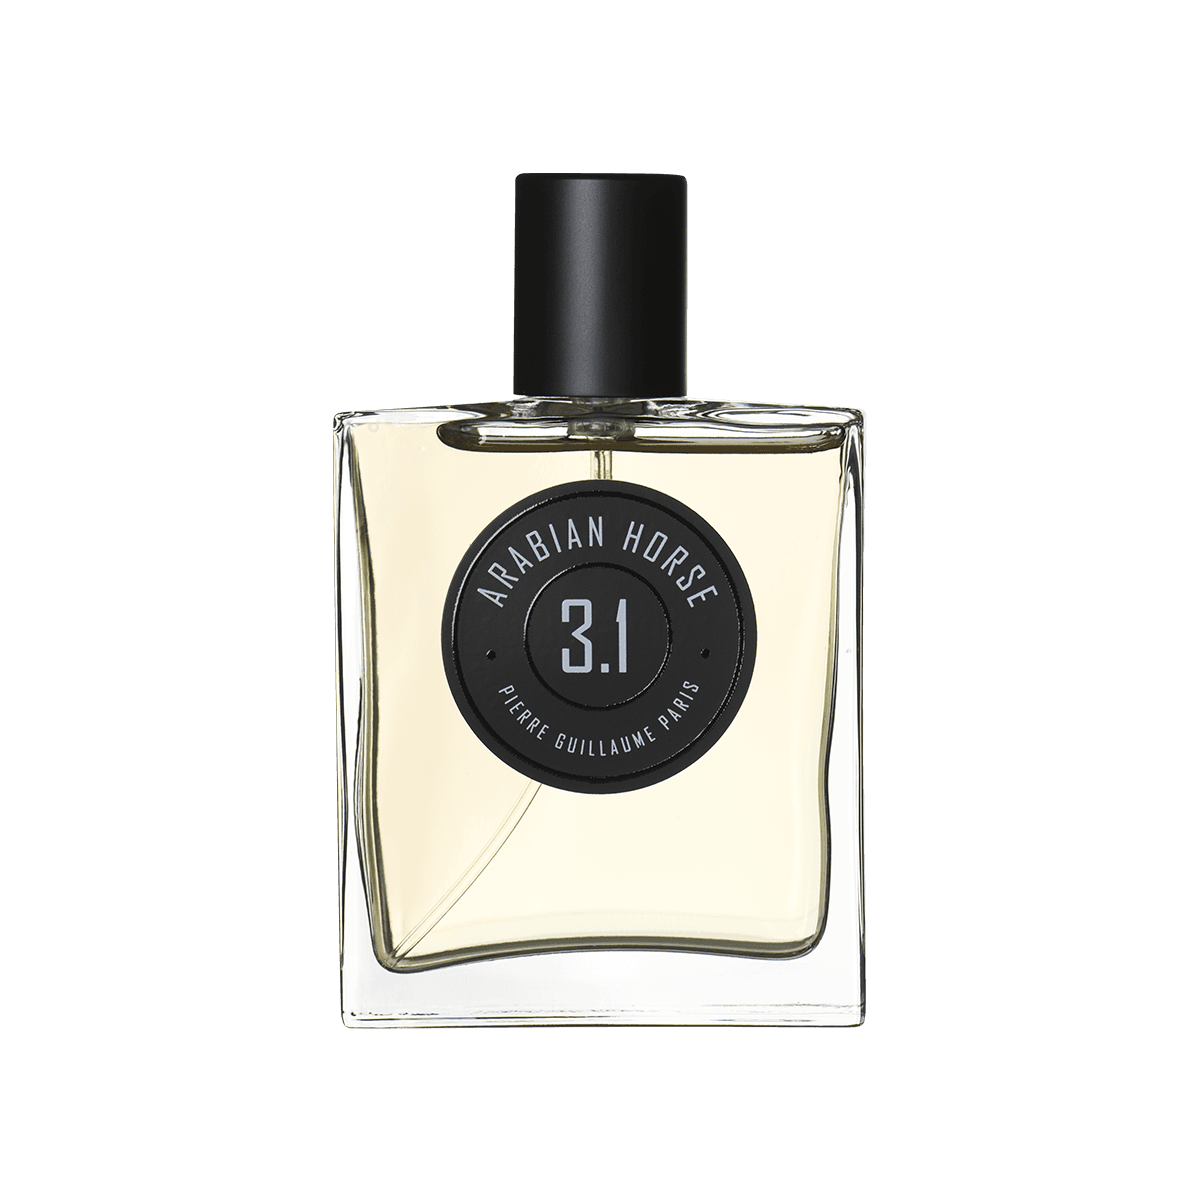 Pierre Guillaume Paris - 3.1 Arabian Horse 50 ml | Perfume Lounge